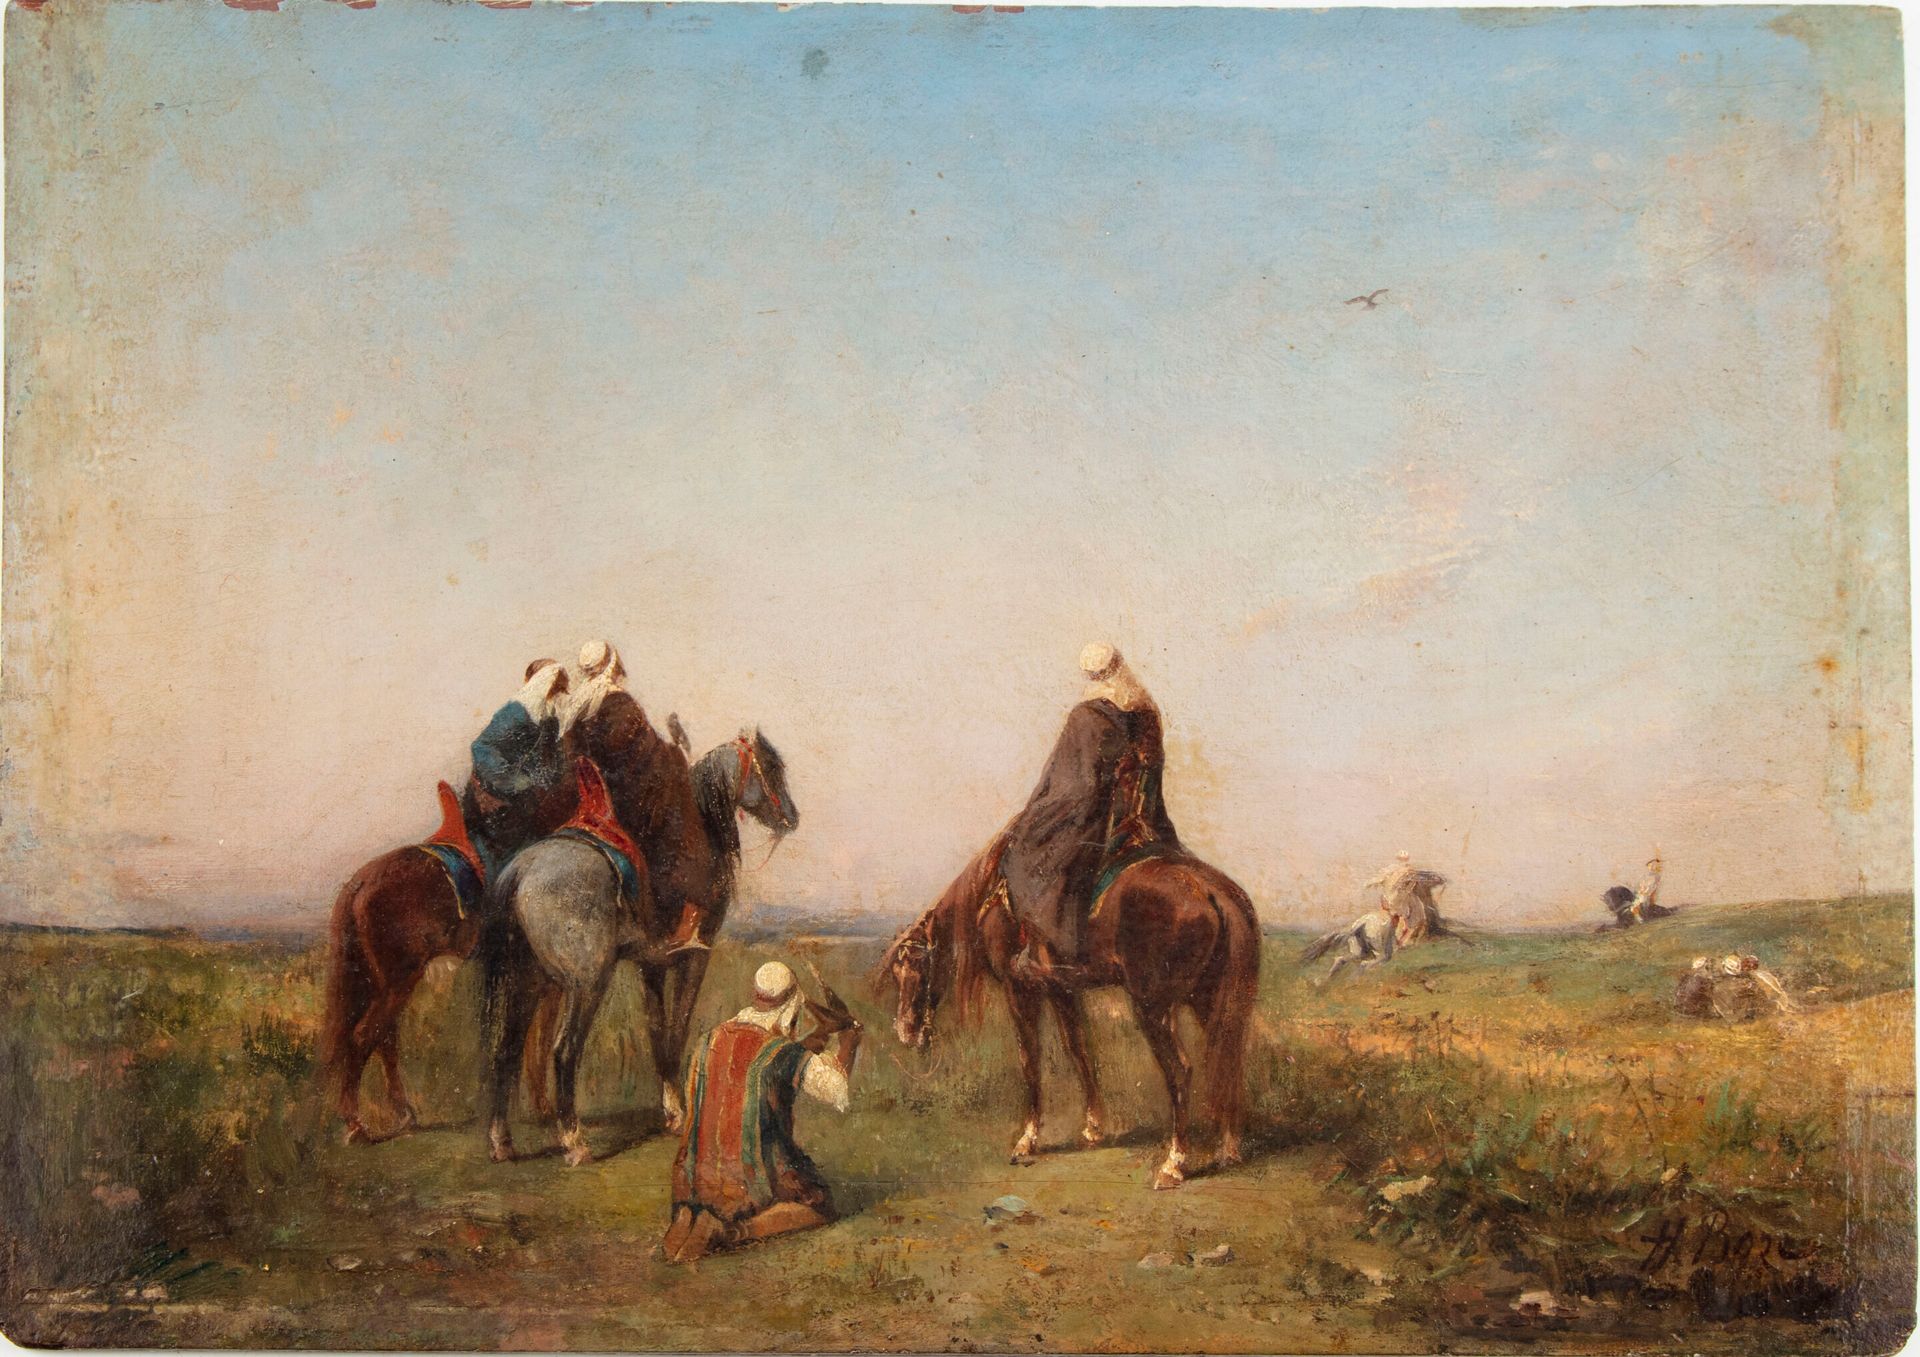 BOZE Honoré BOZE (1830-1908)

Cavalieri arabi 

Olio su tavola, firmato in basso&hellip;